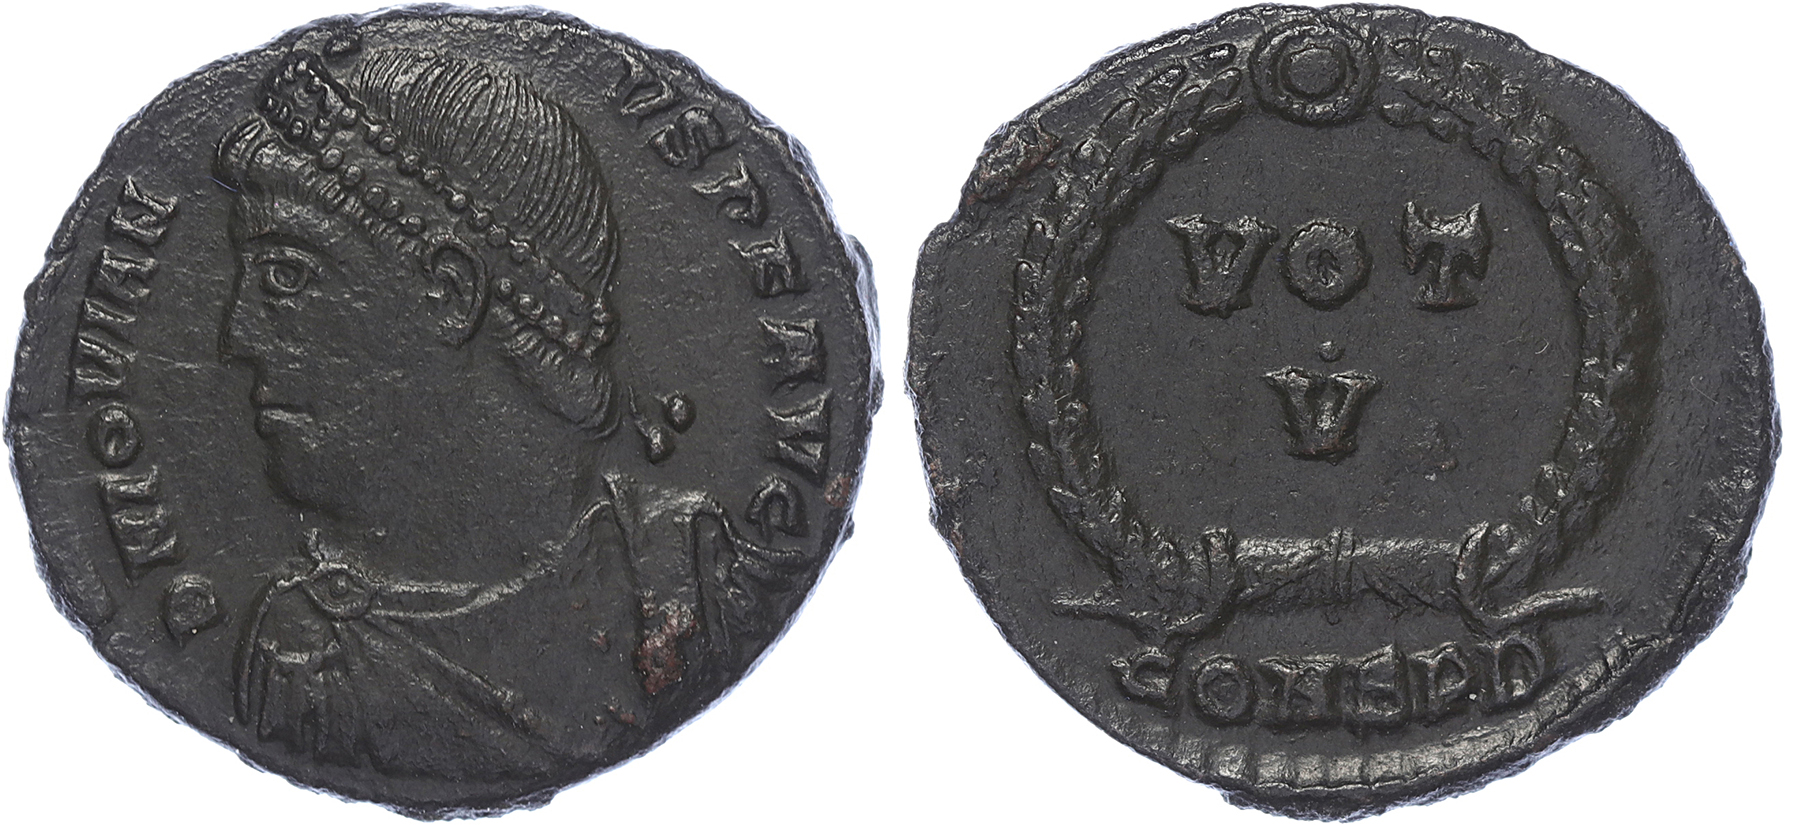 Roman Empire Jovianus AD 363-364